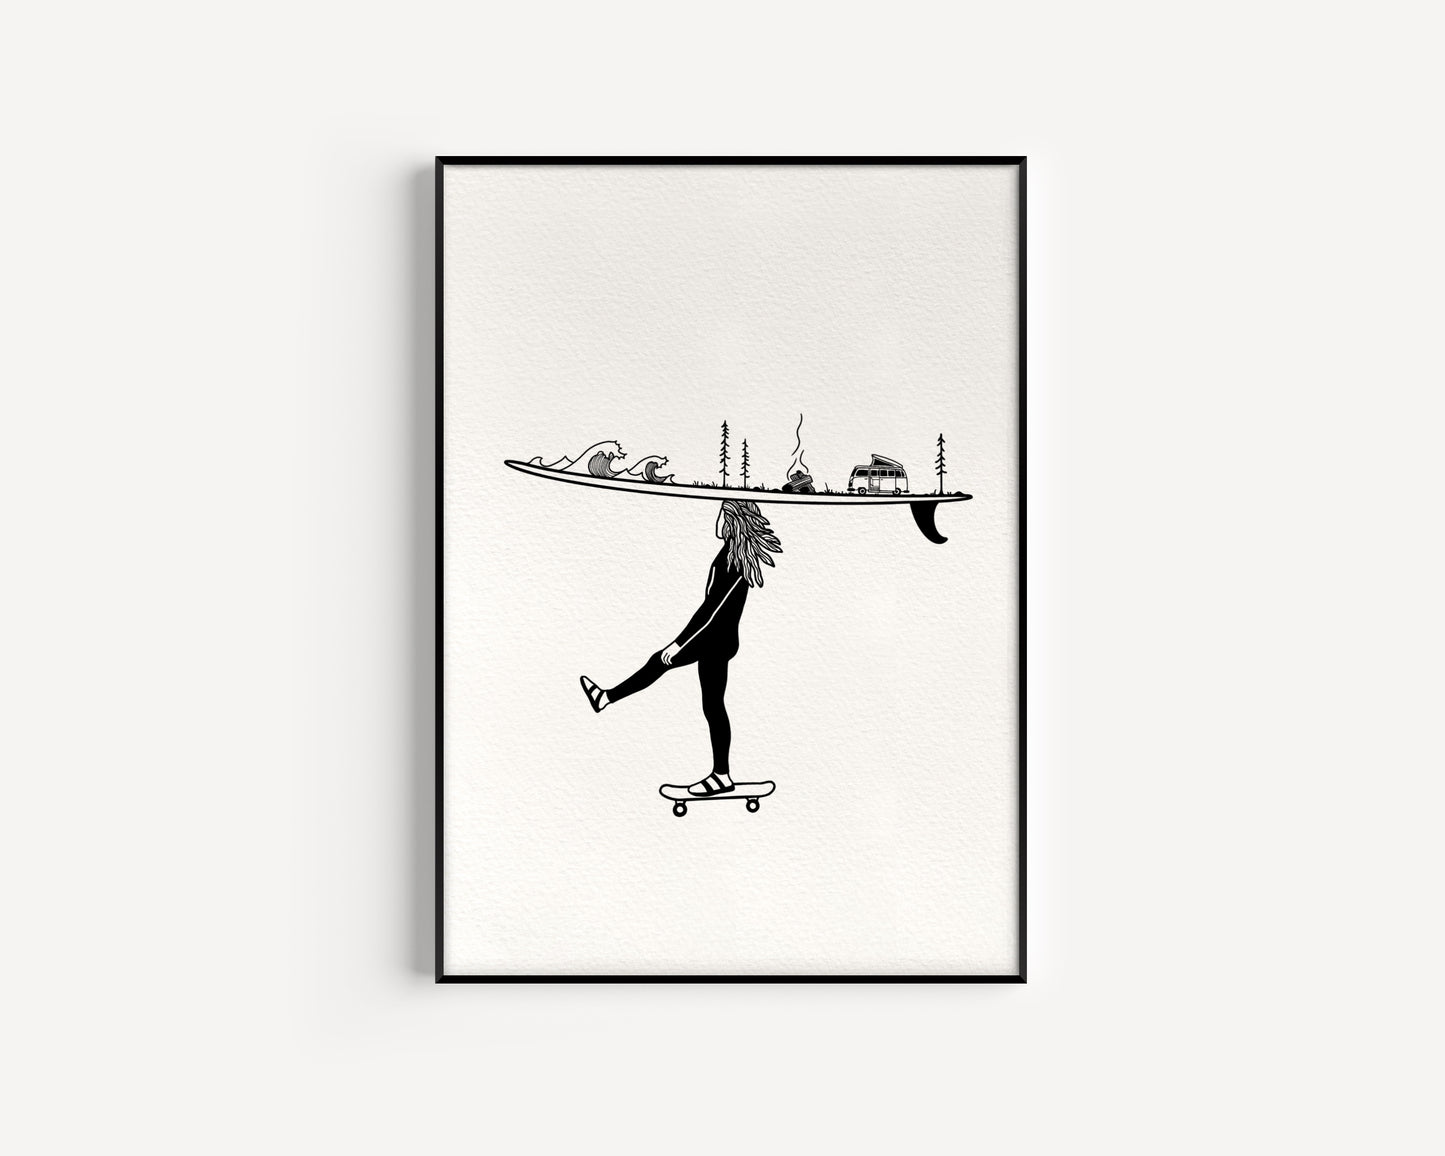 Mr. Surf Skate - Art print - A4